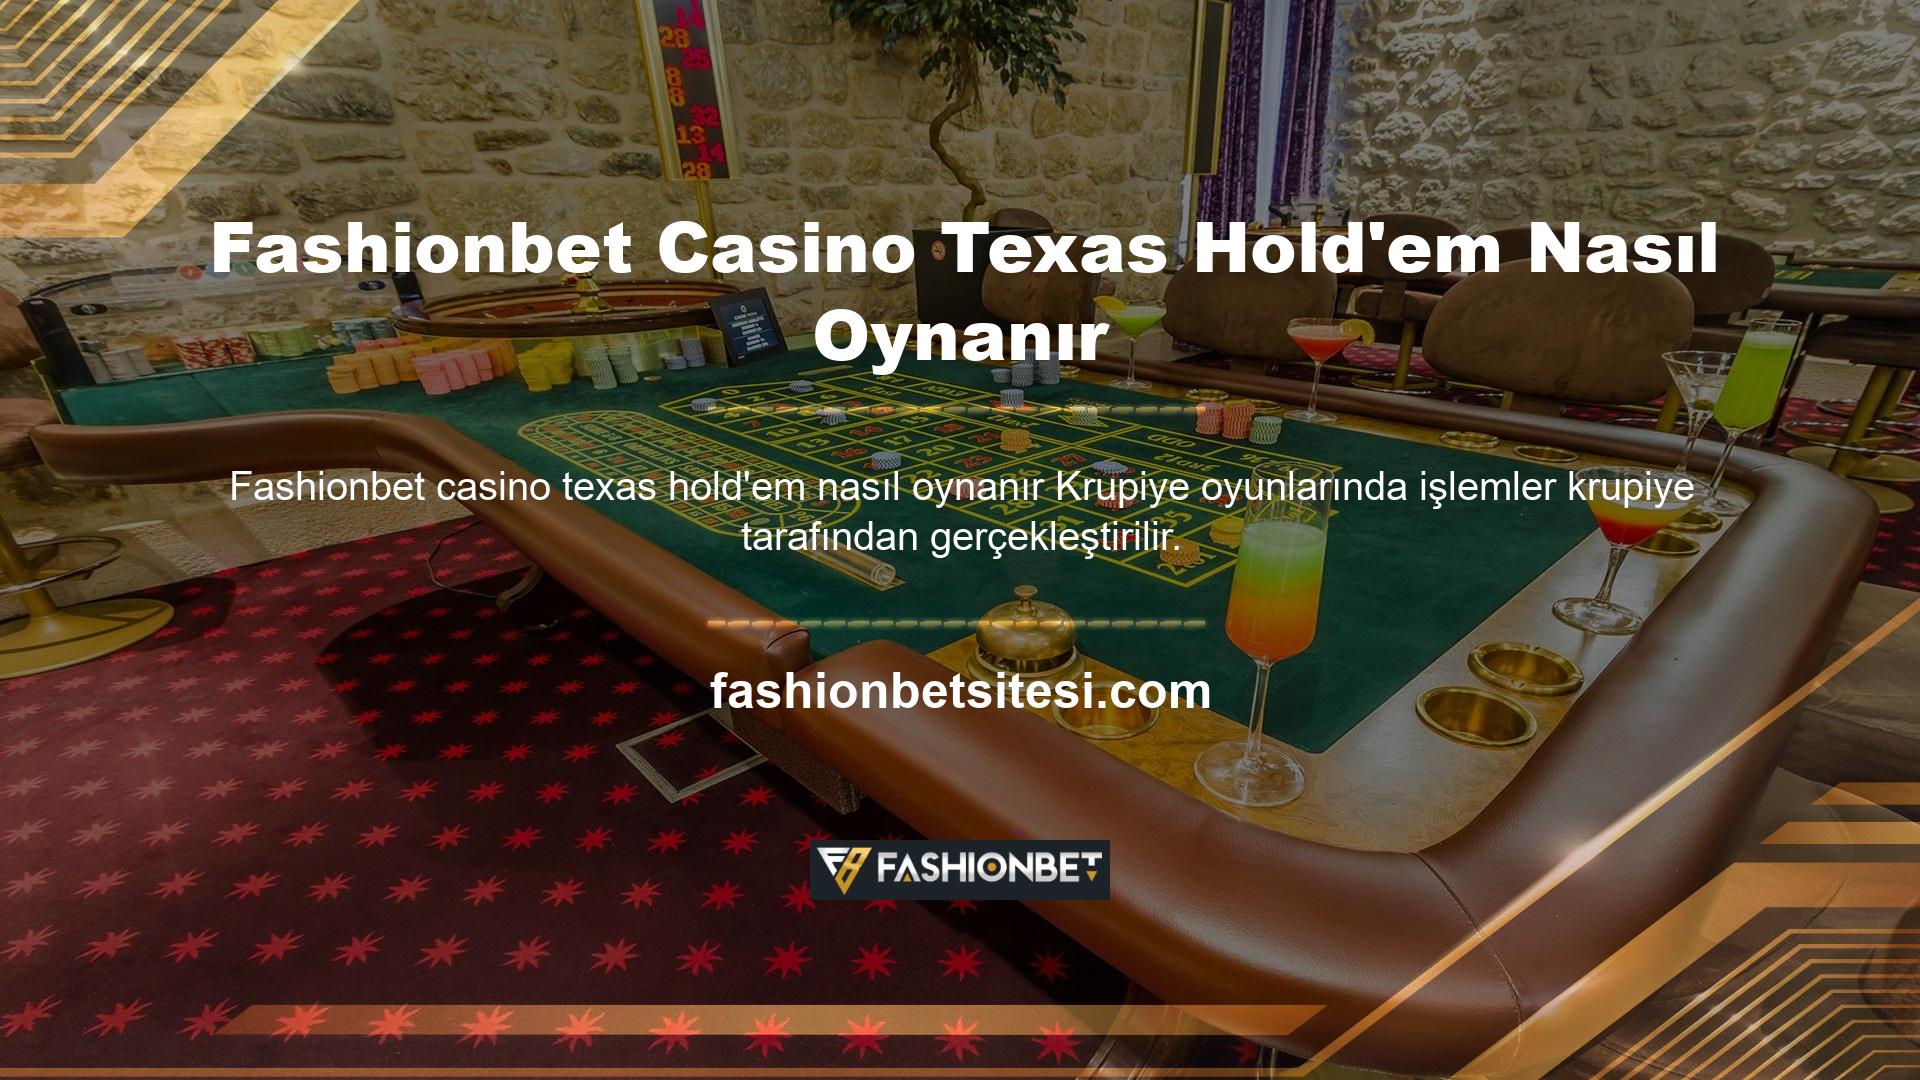 Fashionbet casino texas hold'em nasıl oynanır